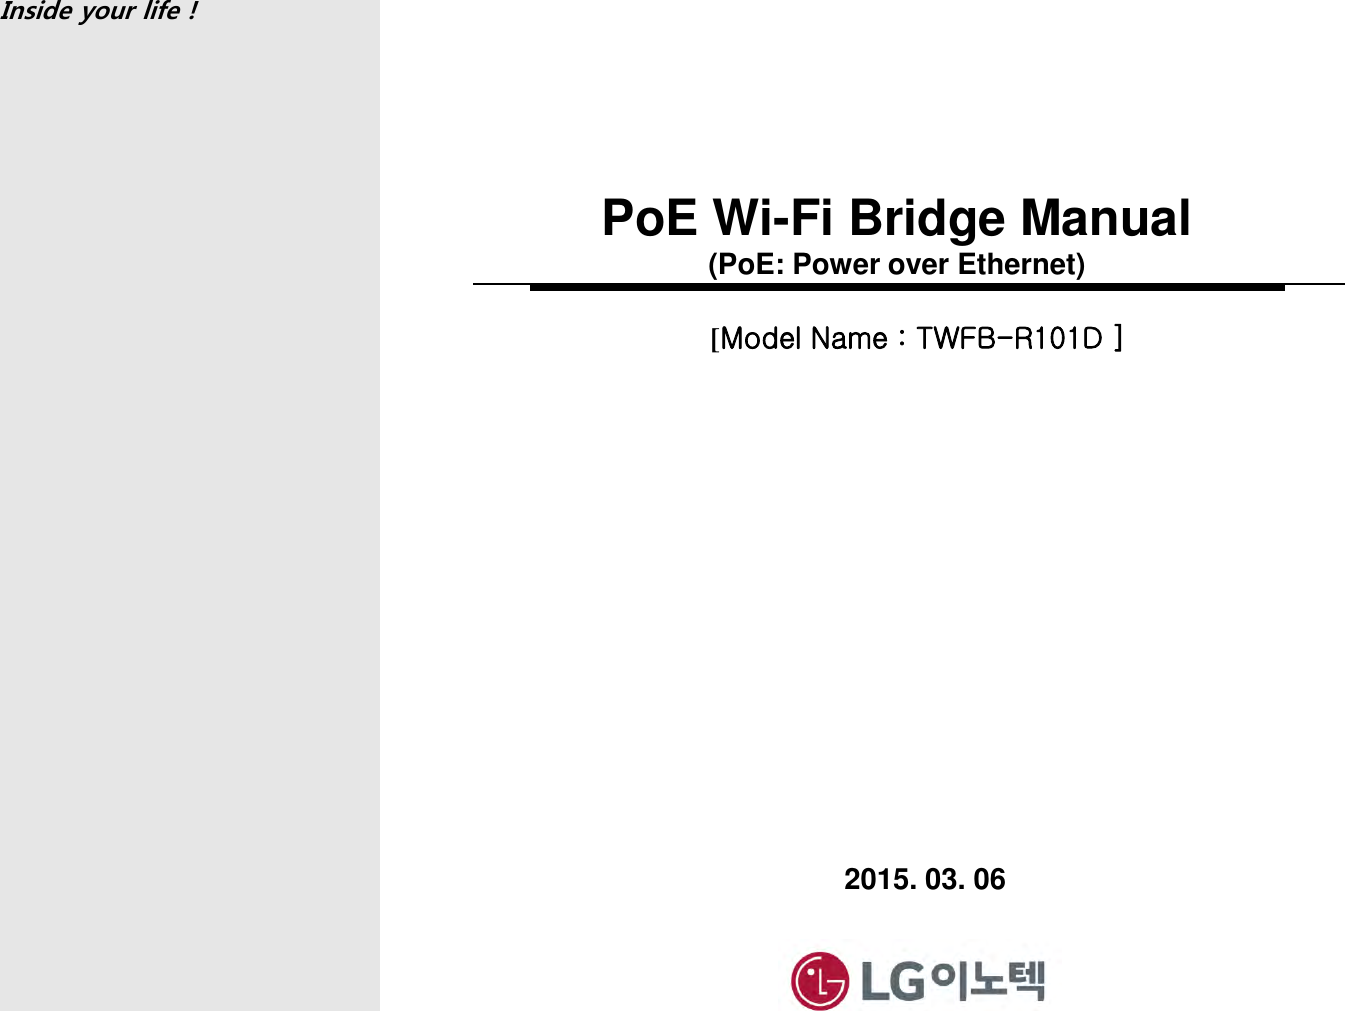 Inside your life ! . PoE Wi-Fi Bridge Manual (PoE: Power over Ethernet) 2015. 03. 06 [Model Name : TWFB-R101D ] 